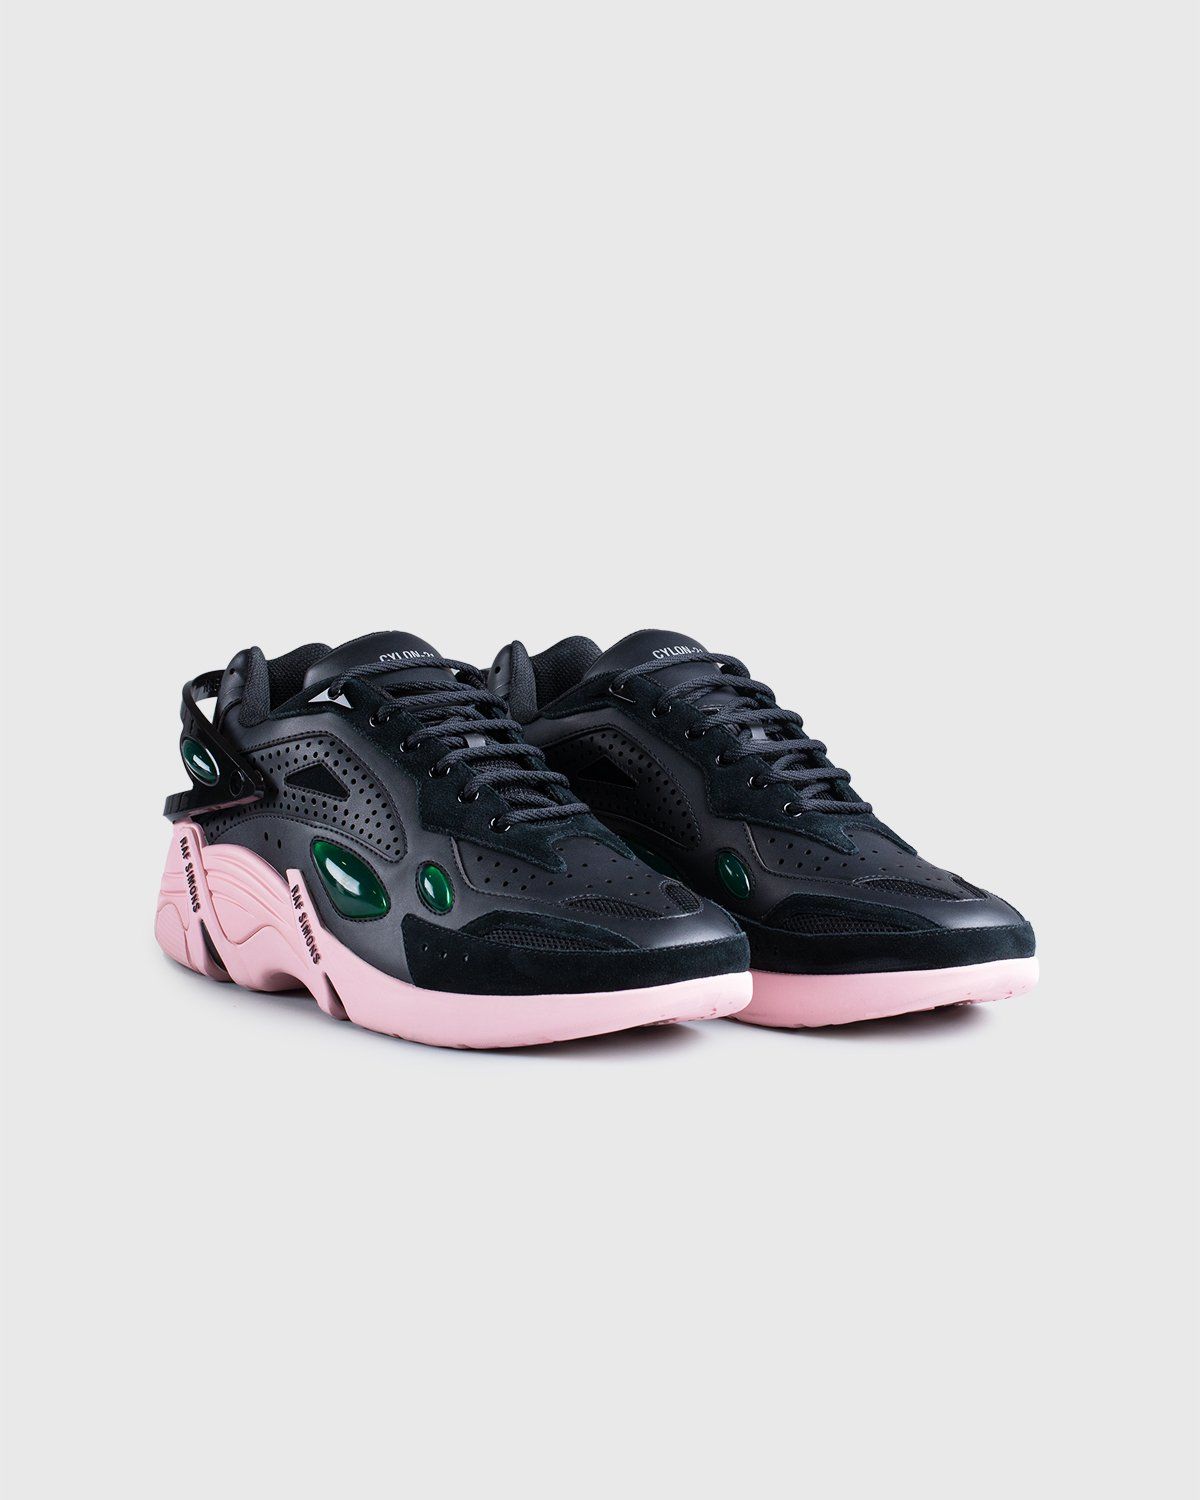 Raf Simons – Cylon Black/Pink - Sneakers - Black - Image 3